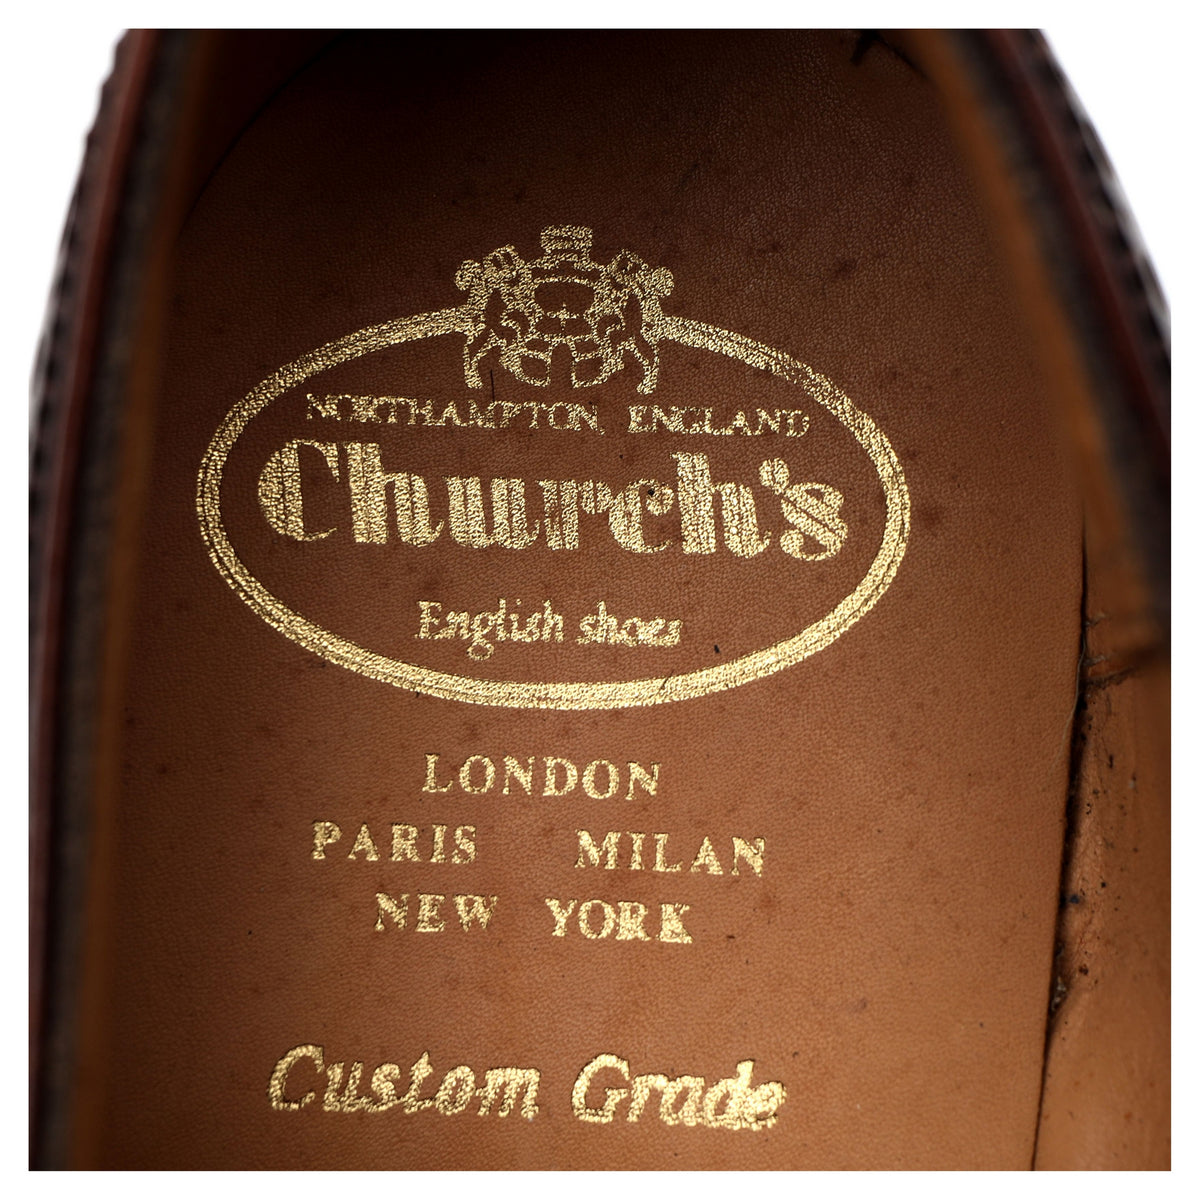 Dark Brown Leather Oxford Brogues UK 8.5 F